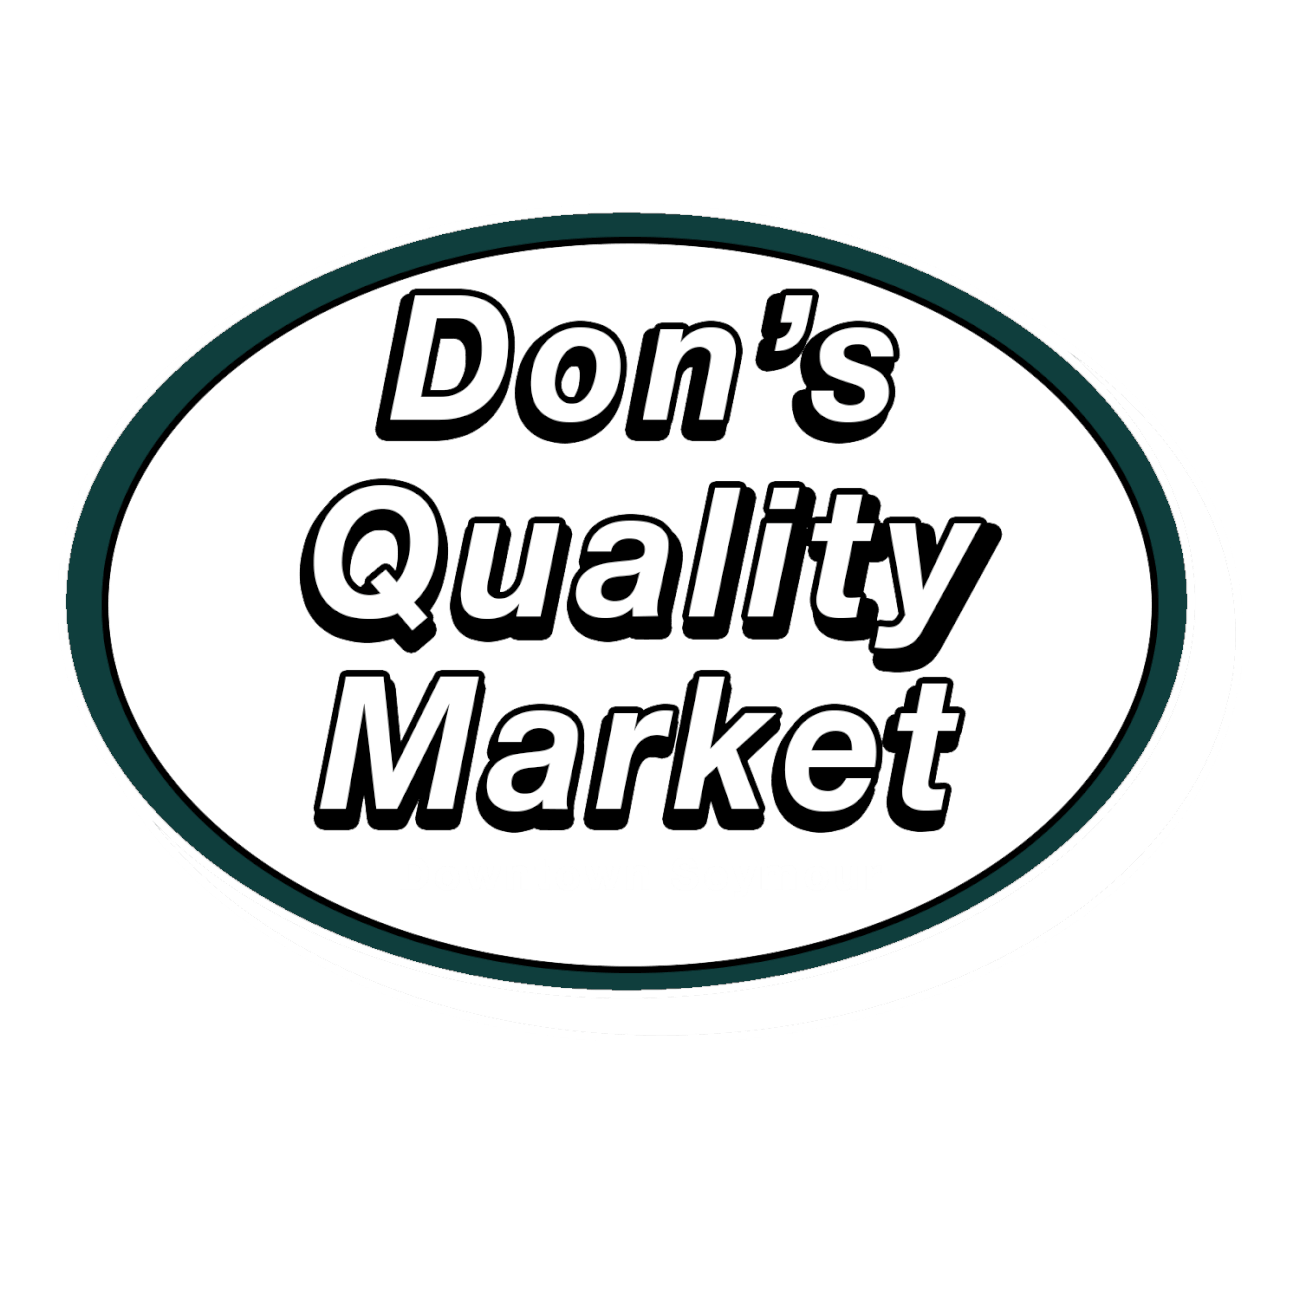 A theme logo of Don's Quality Market